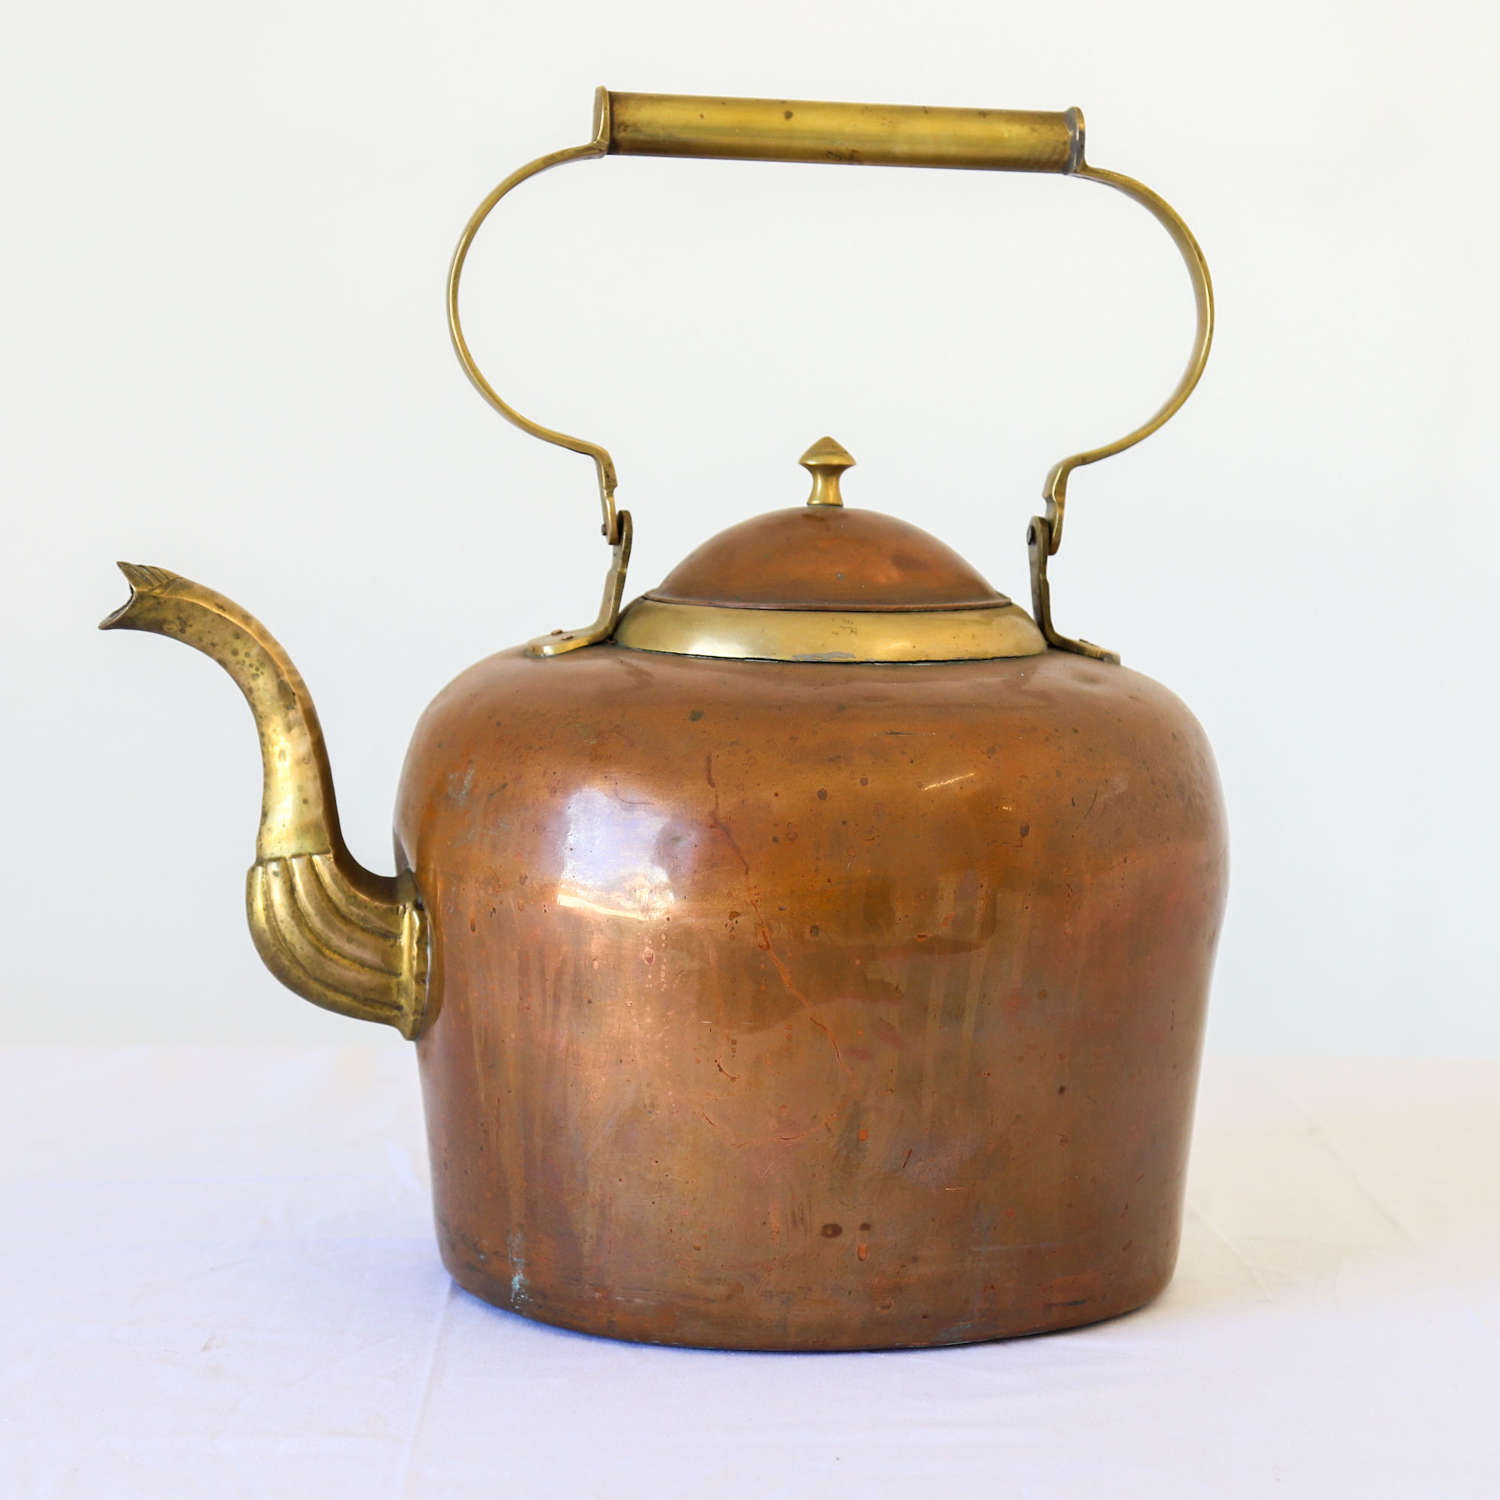 Early 19th Century circa 1820-1840 2 Gallon Copper Kettle